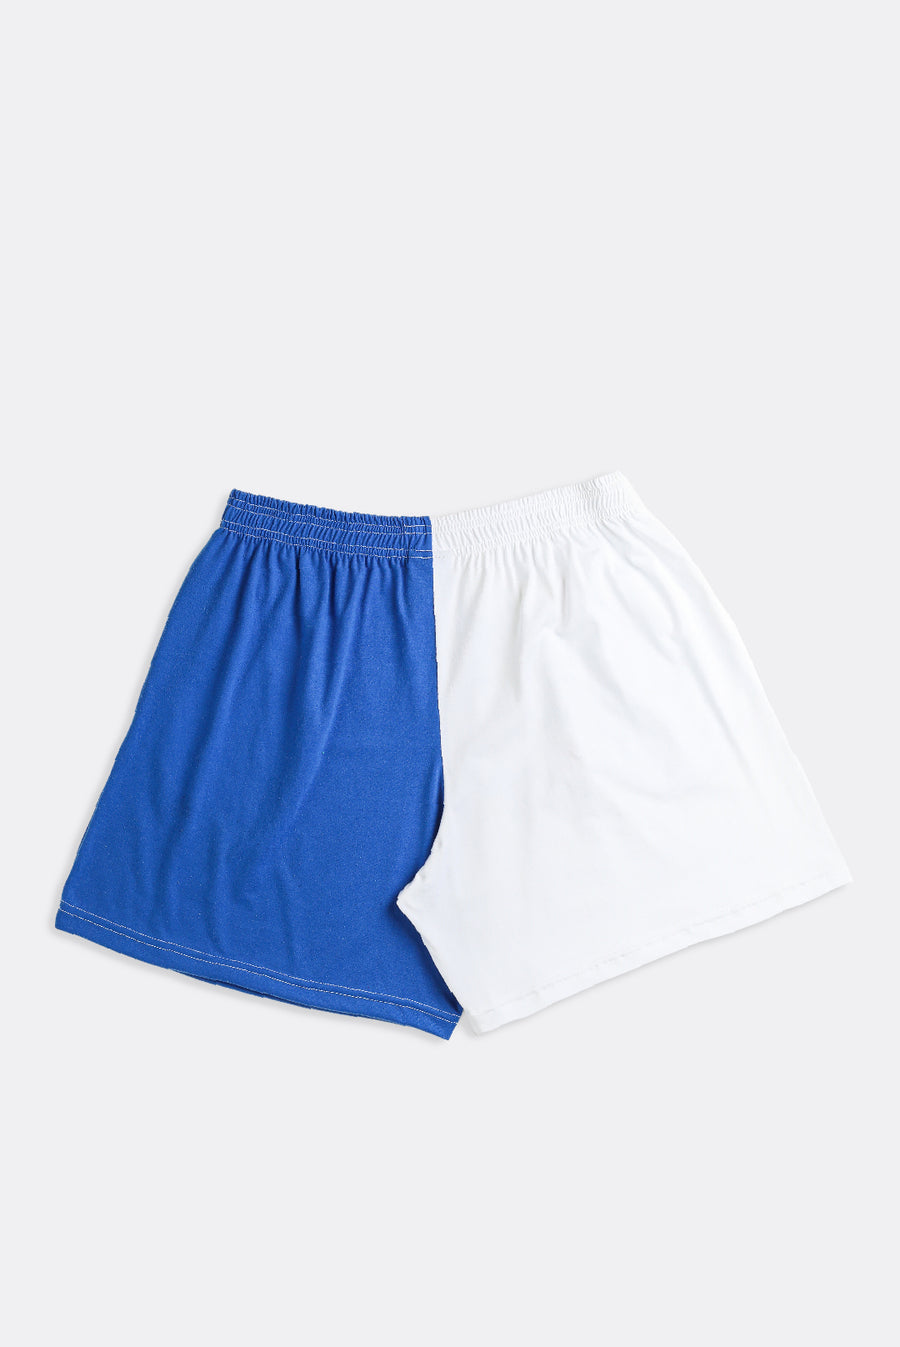 Unisex Rework Adidas Tee Shorts - L